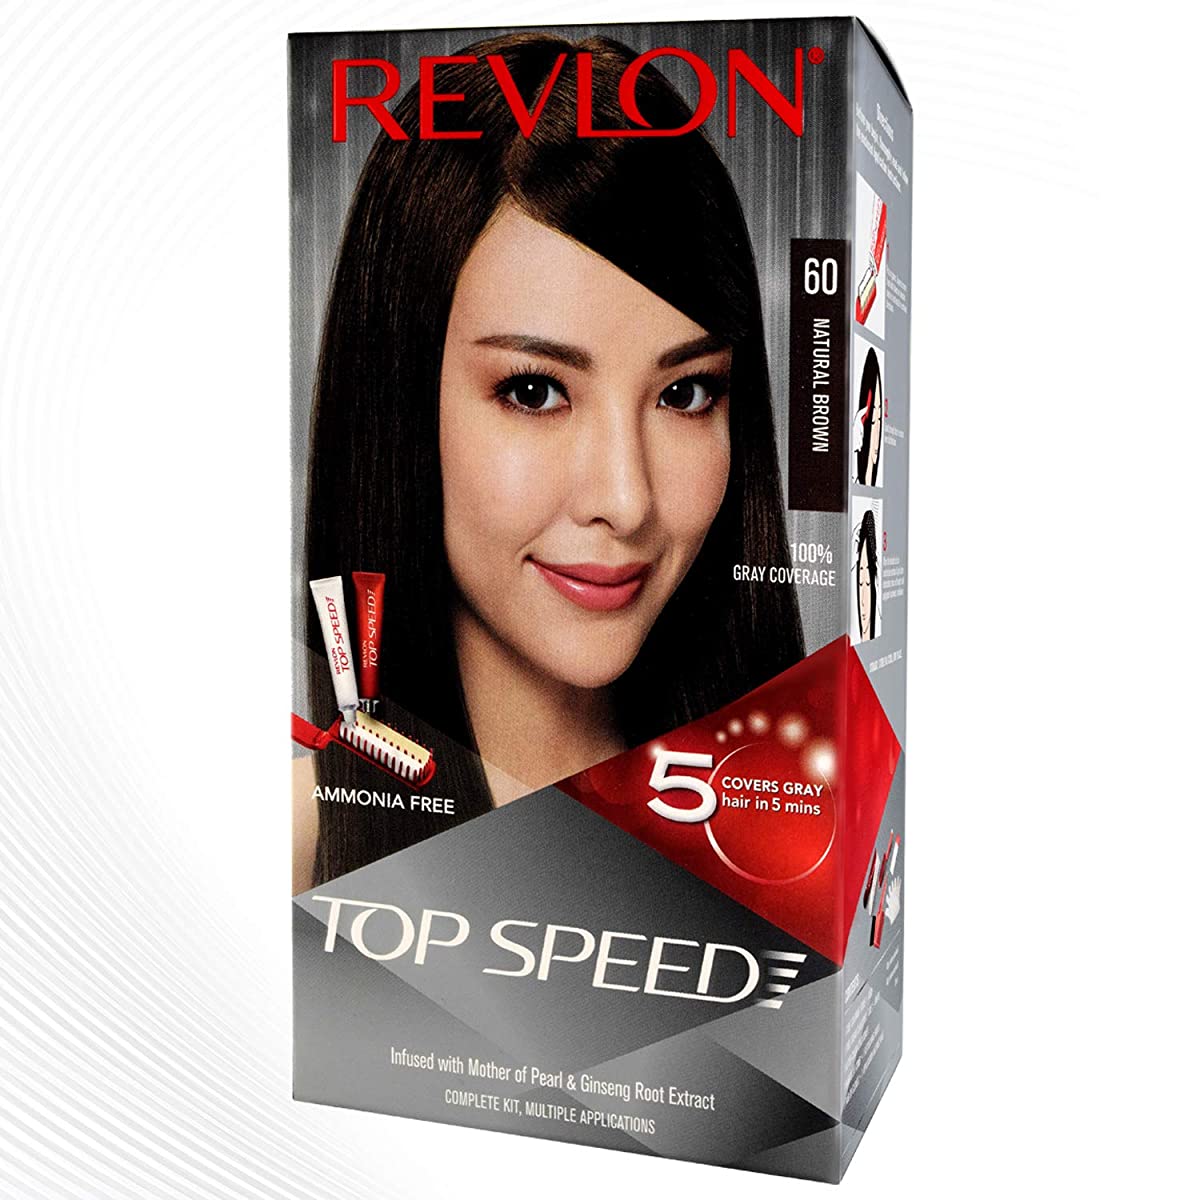 Revlon Top Speed Hair Color 60 Natural Brown (40 g + 40 g + 15 ml) Revlon